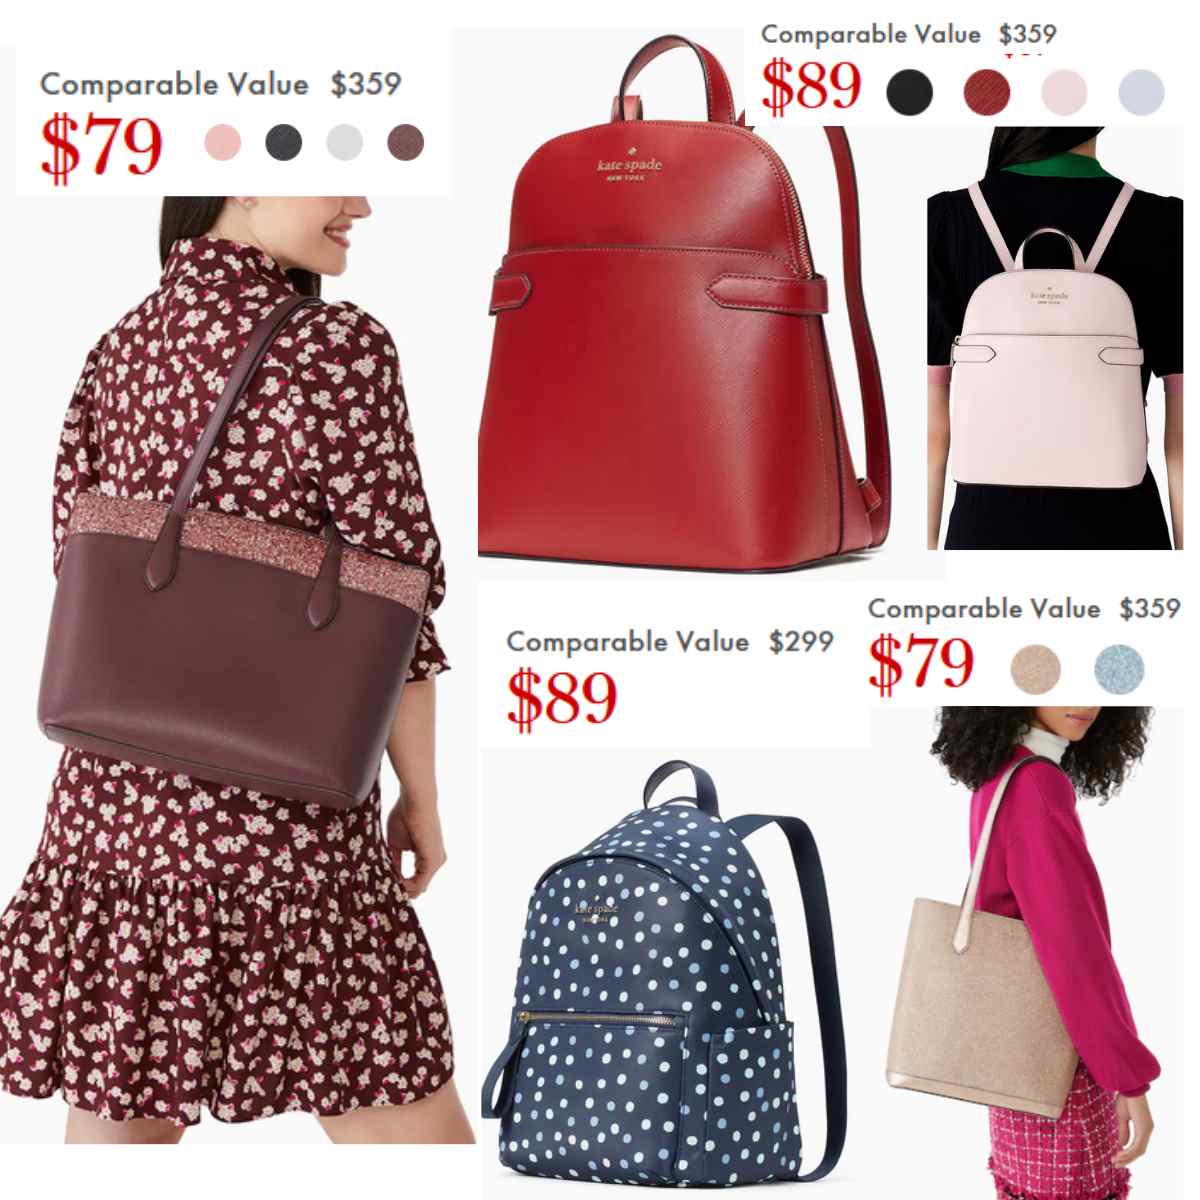 Awesome savings on Kate Spade handbags plus free shipping on all orders |  Smart Savers